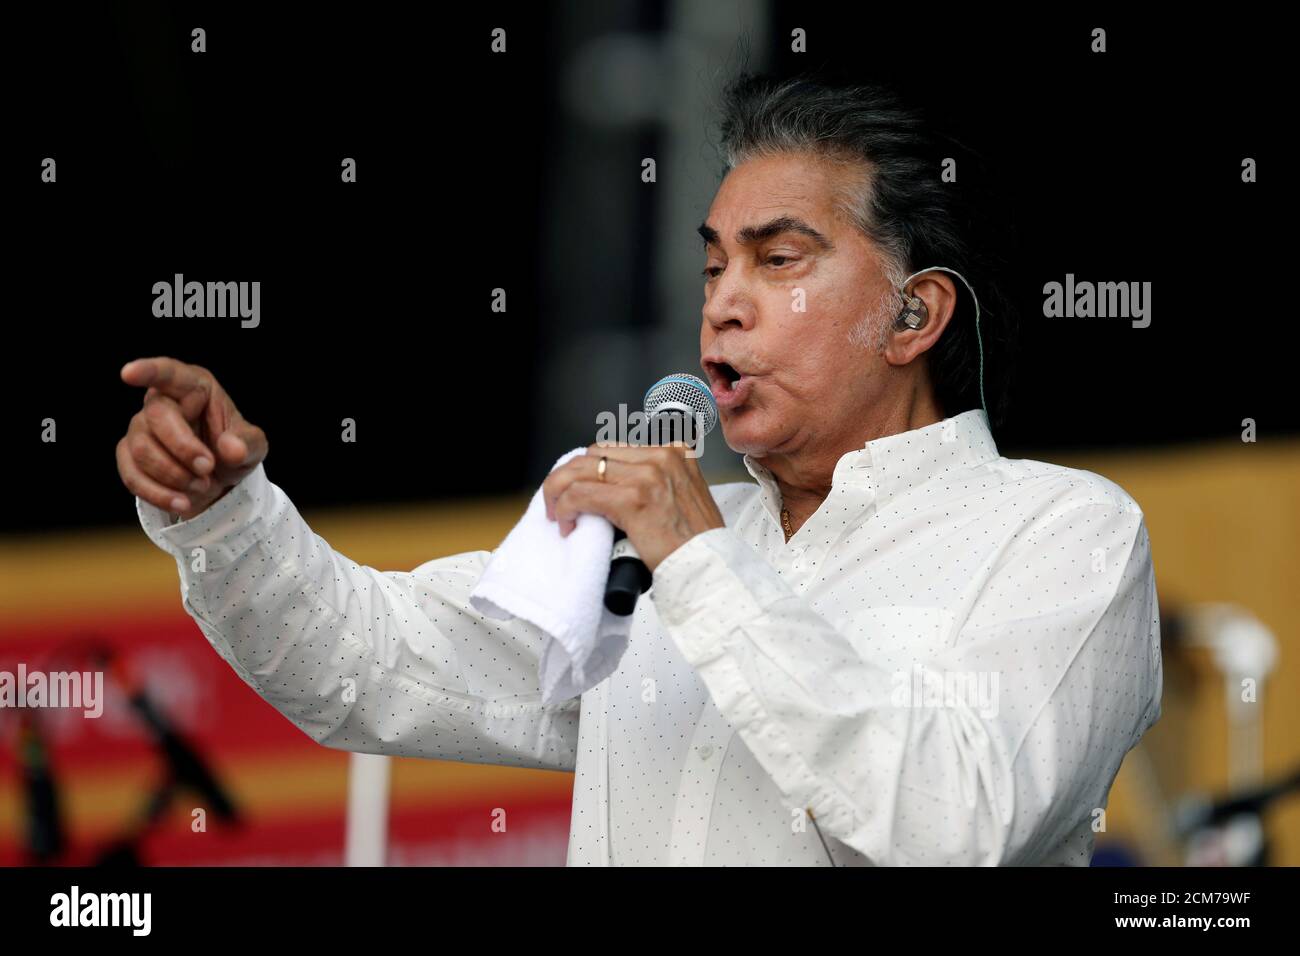 Venezuelan singer Jose Luis Rodriguez "El Puma", sings during the  "Venezuela Aid Live" concert at the